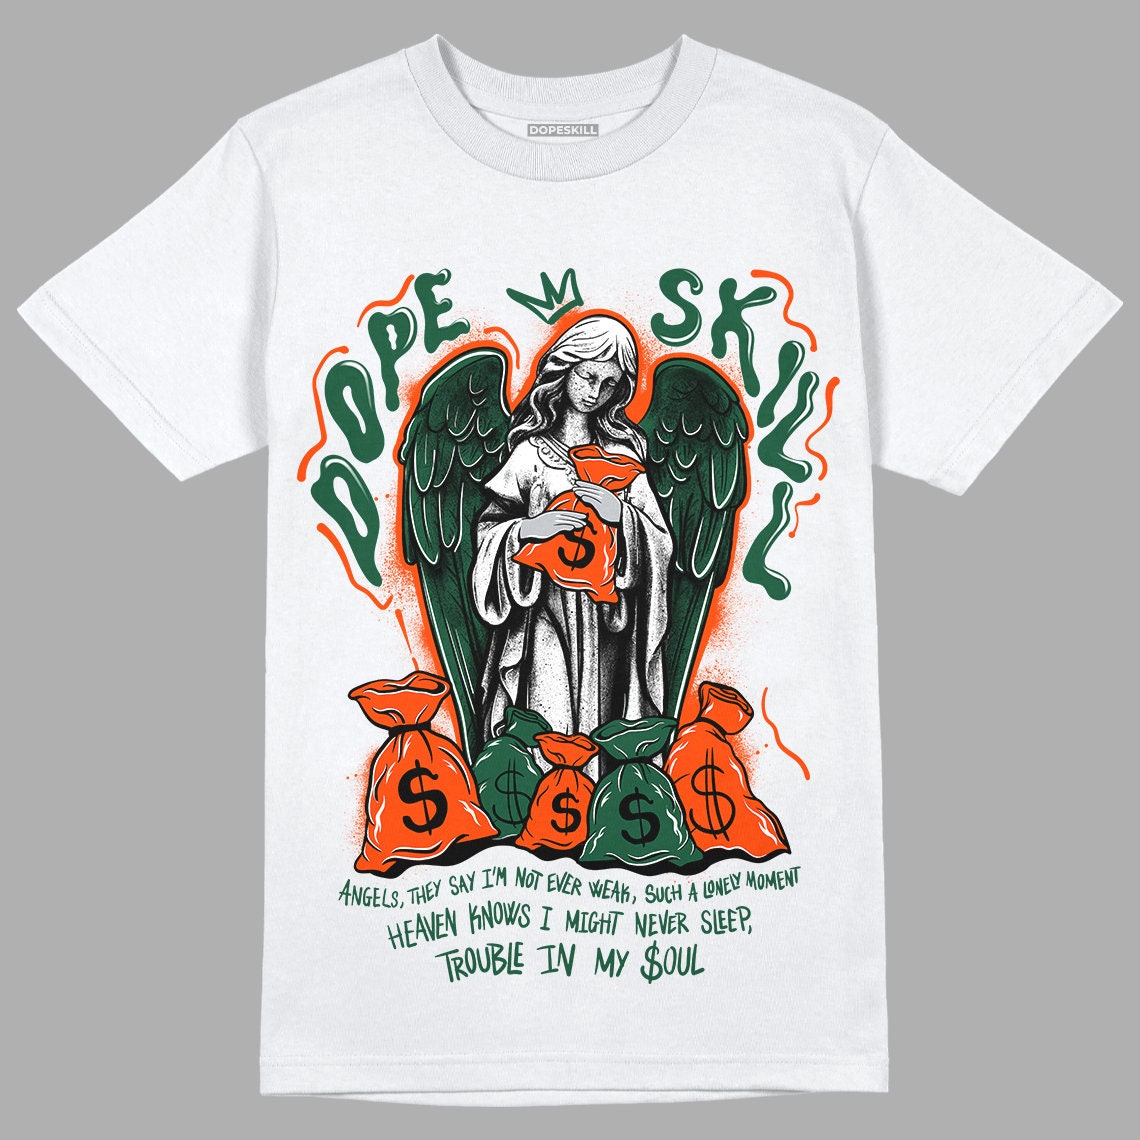 Off-White 2020 Graphic Print T-Shirt - Orange T-Shirts, Clothing -  OFFVA56663